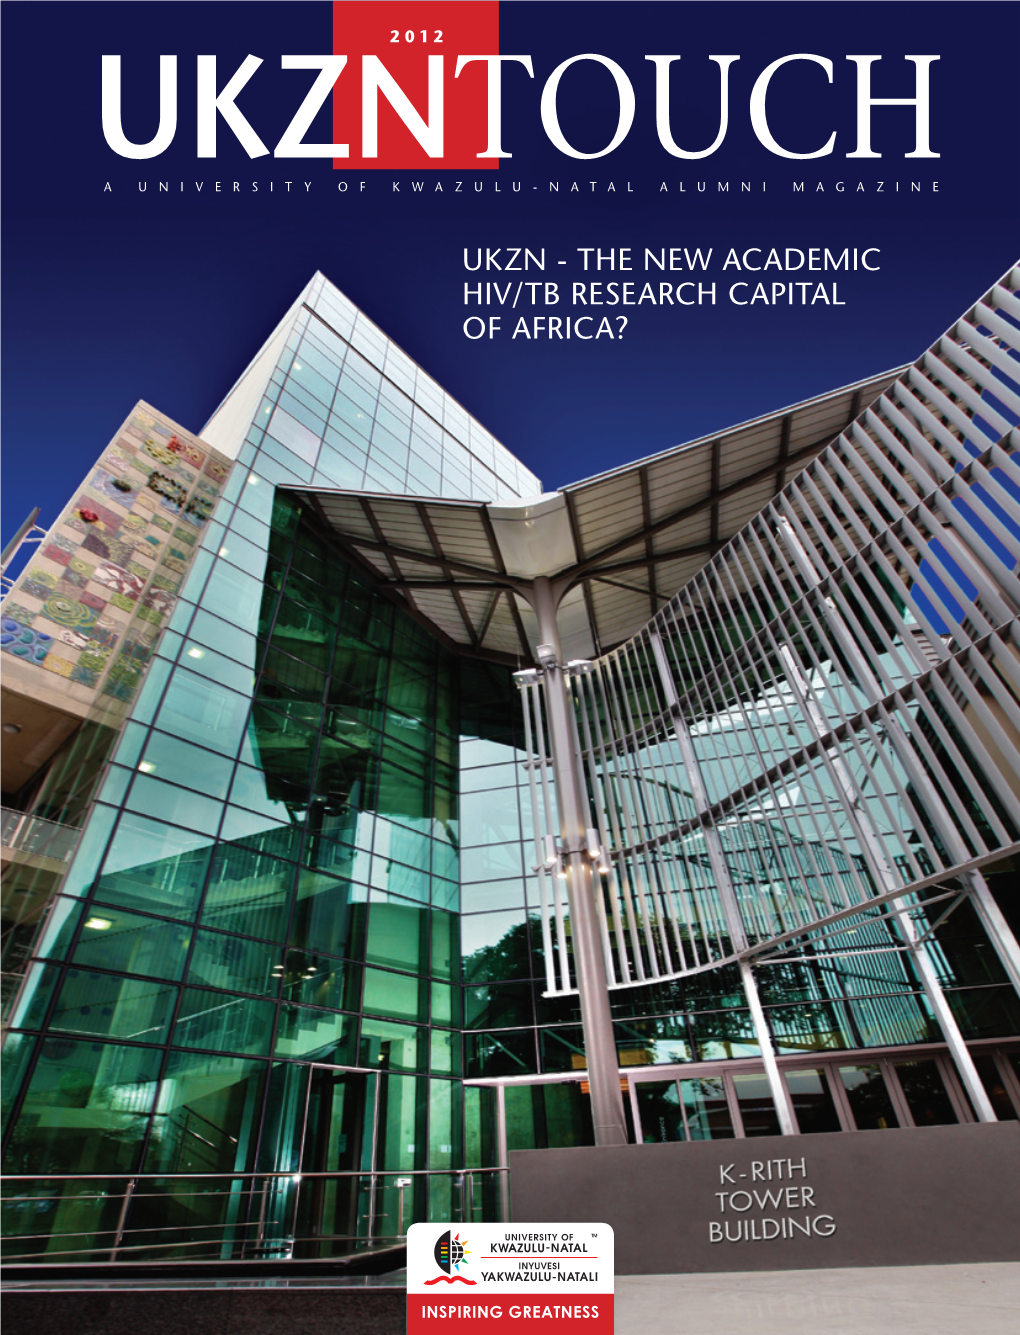 Ukzntouch a University of Kwazulu-Natal Alumni Magazine